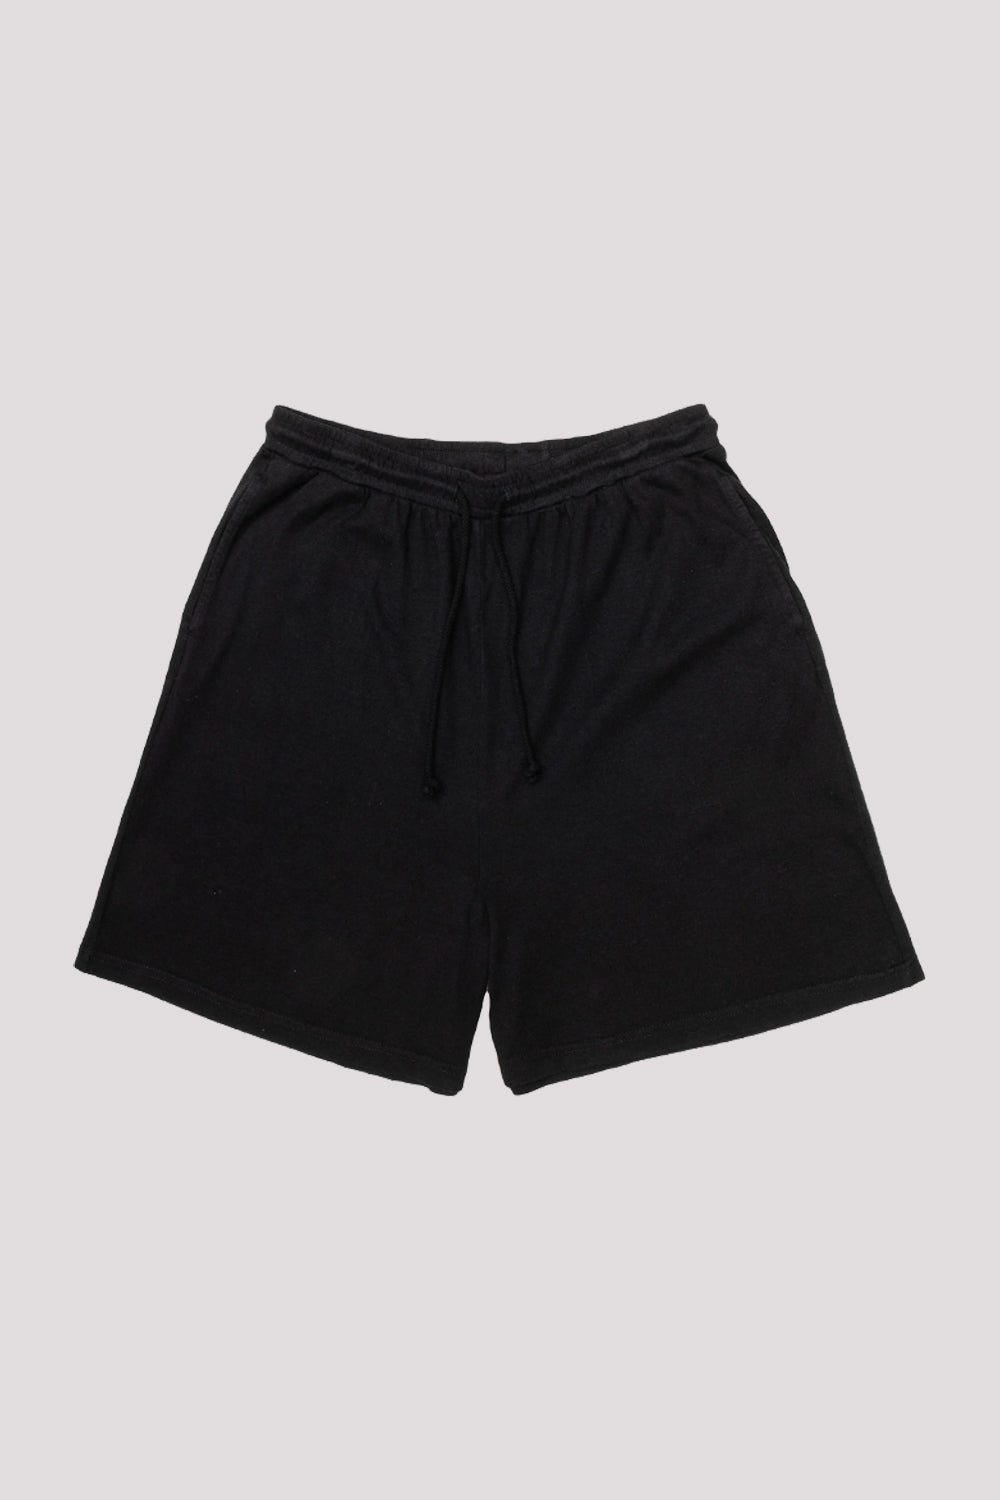 Tee Shorts | Black | Stock NZ | BUDDY HEMP GOODS NZ | Black Box Boutique Auckland | Womens Fashion NZ